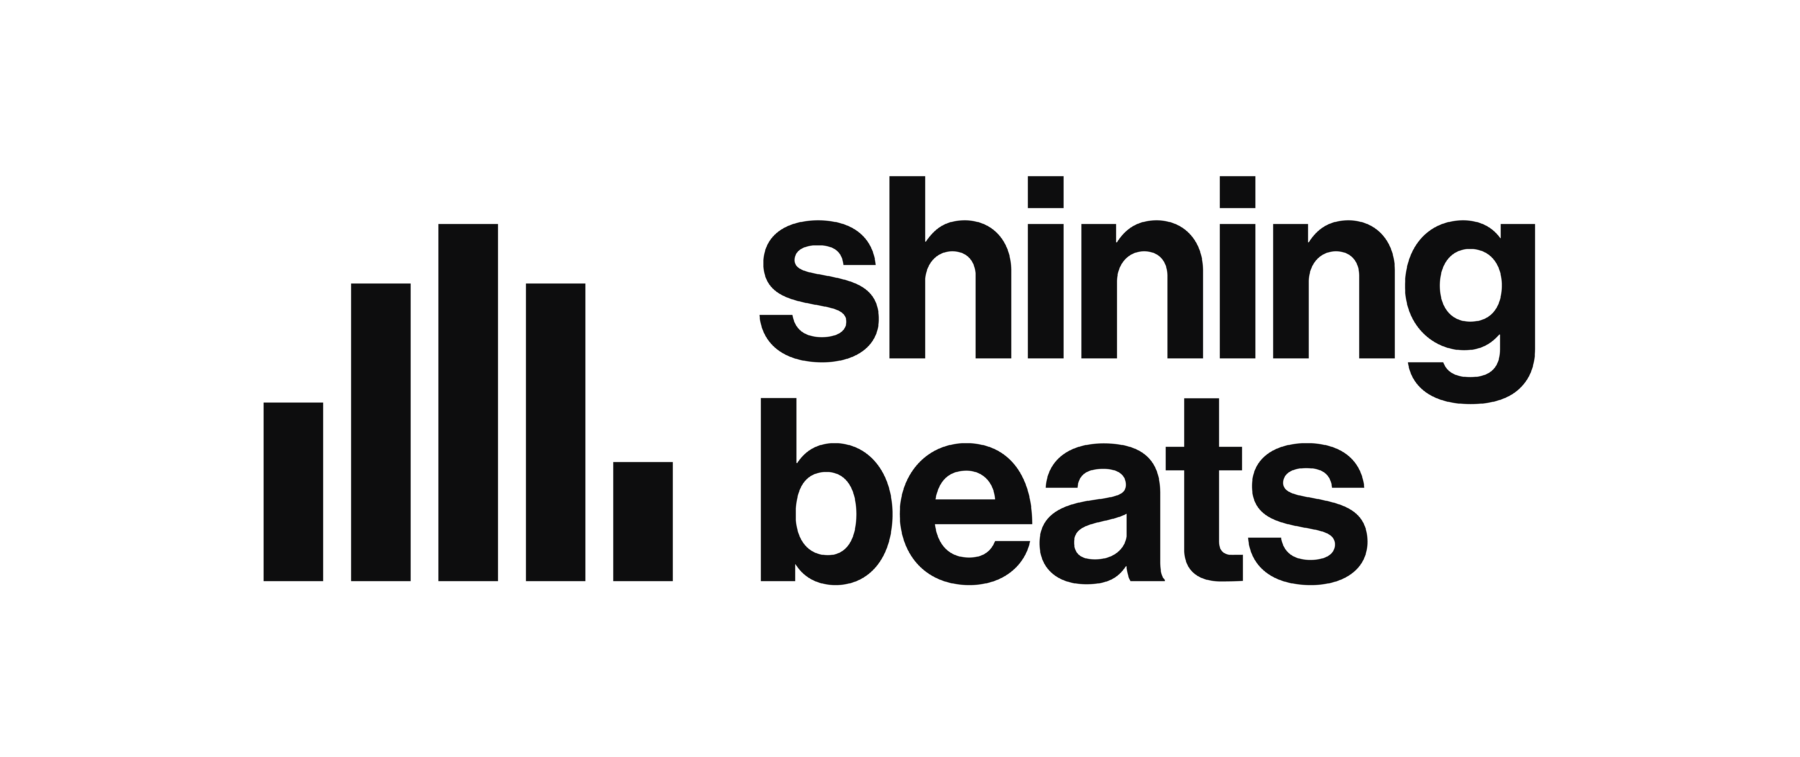 Shining Beats Poster Logo Black